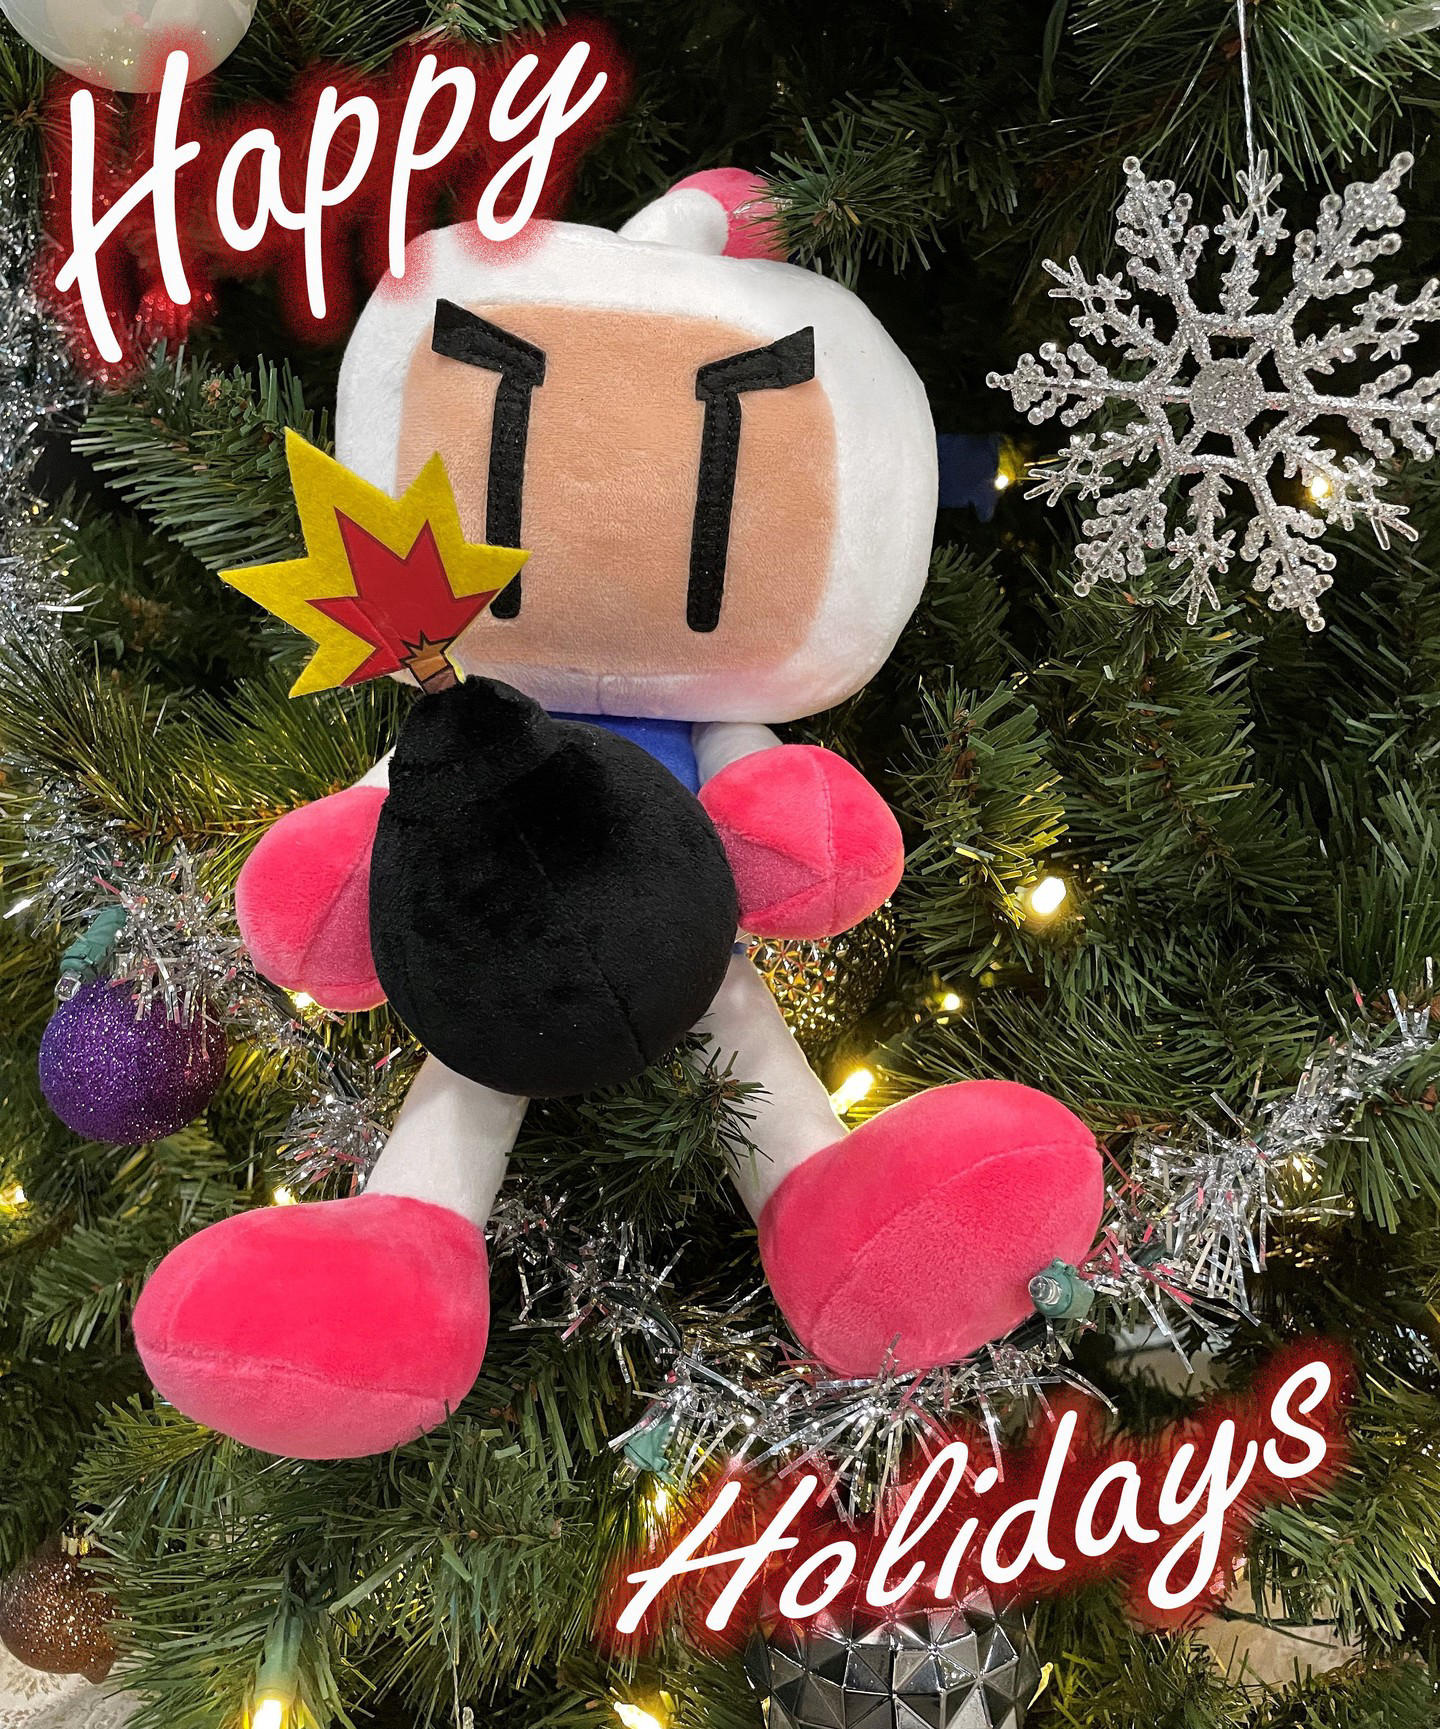 Konami Digital Entertainment - Wishing everyone a safe and happy holiday season